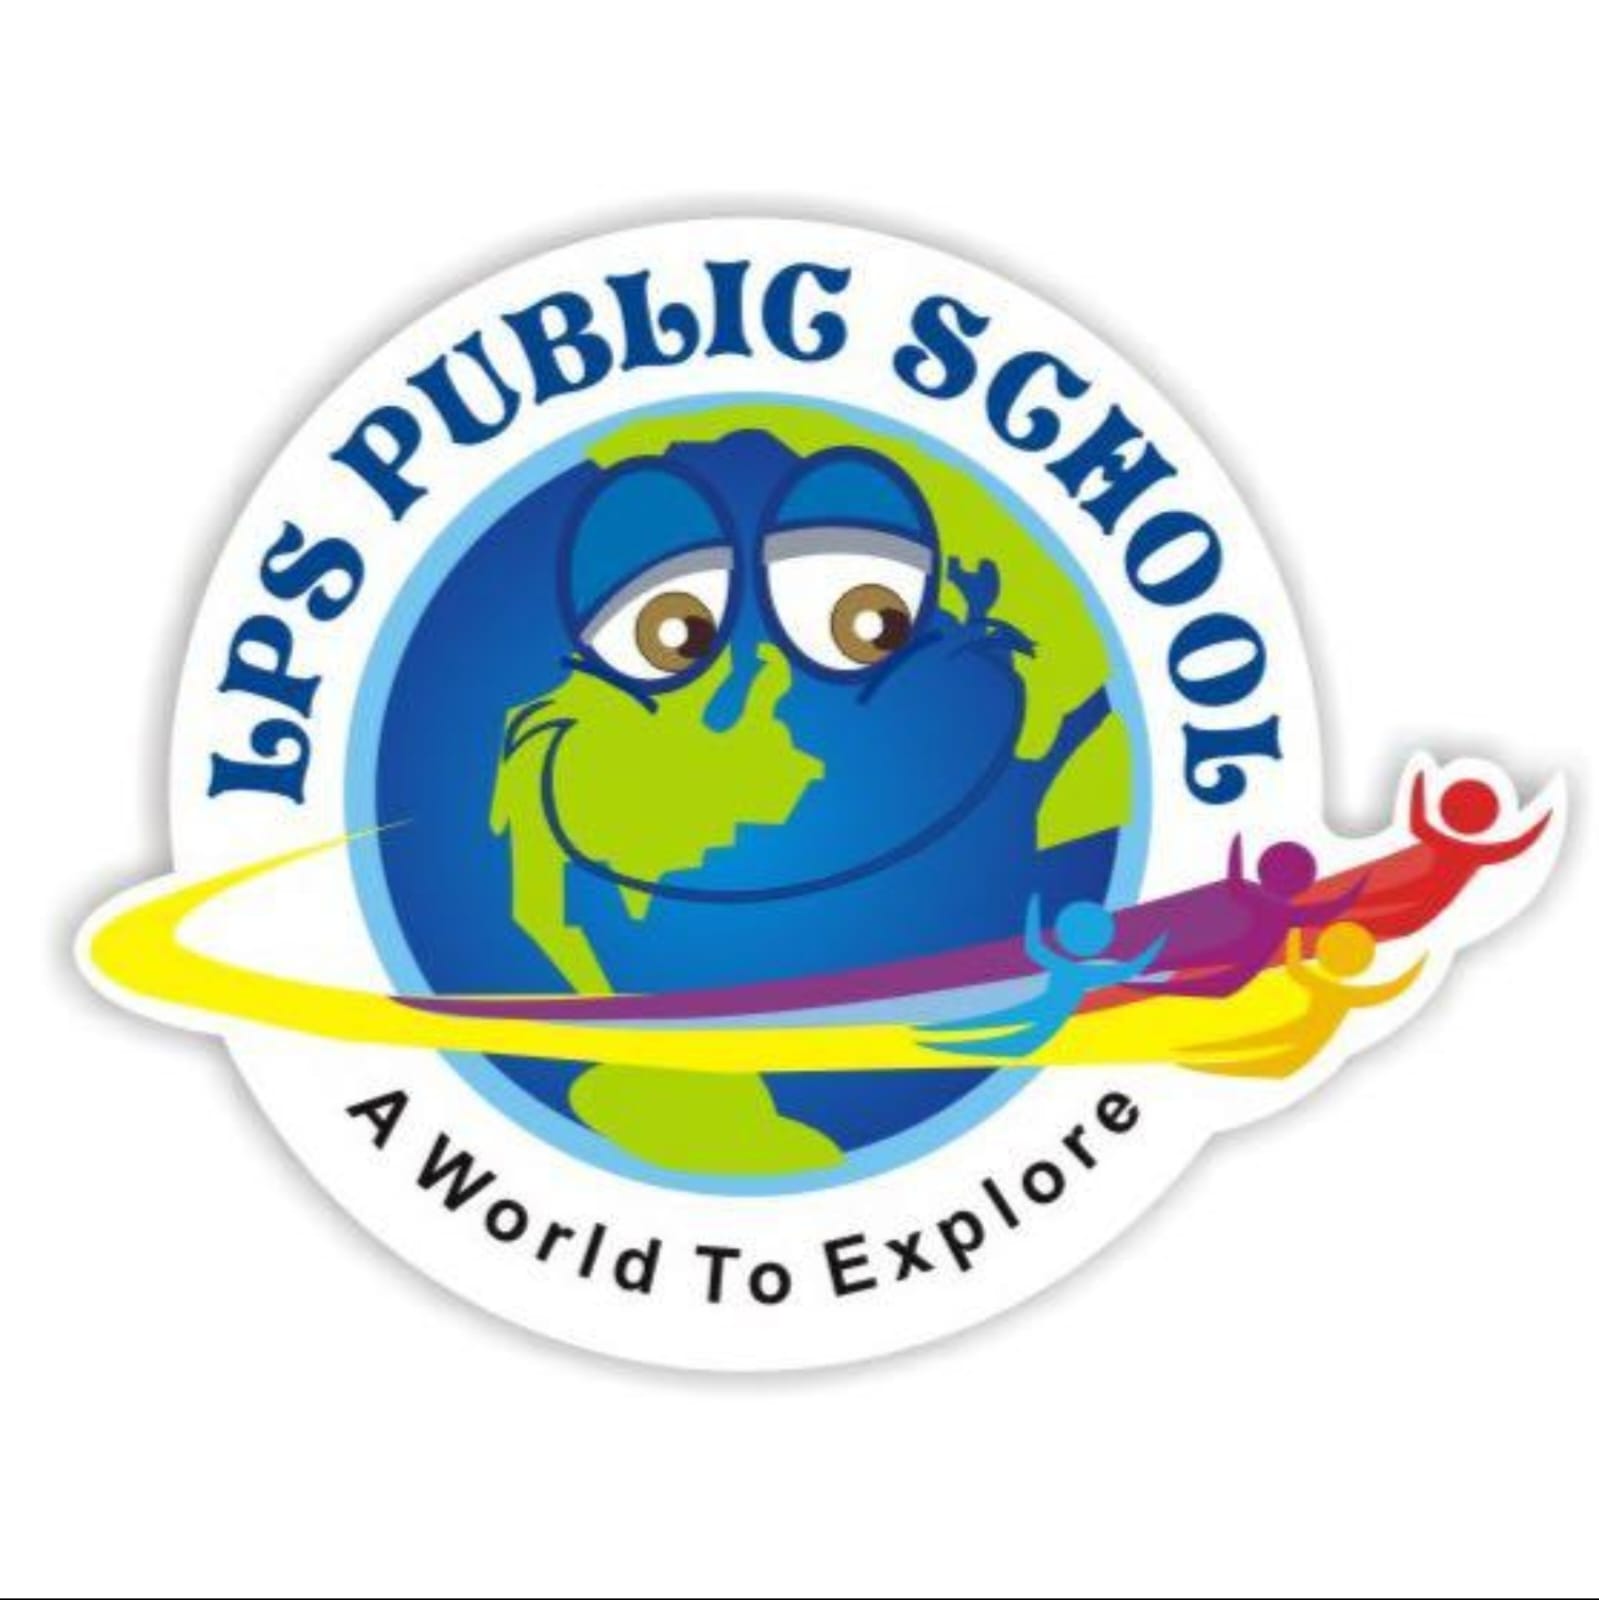 LPS PUBLIC SCHOOL